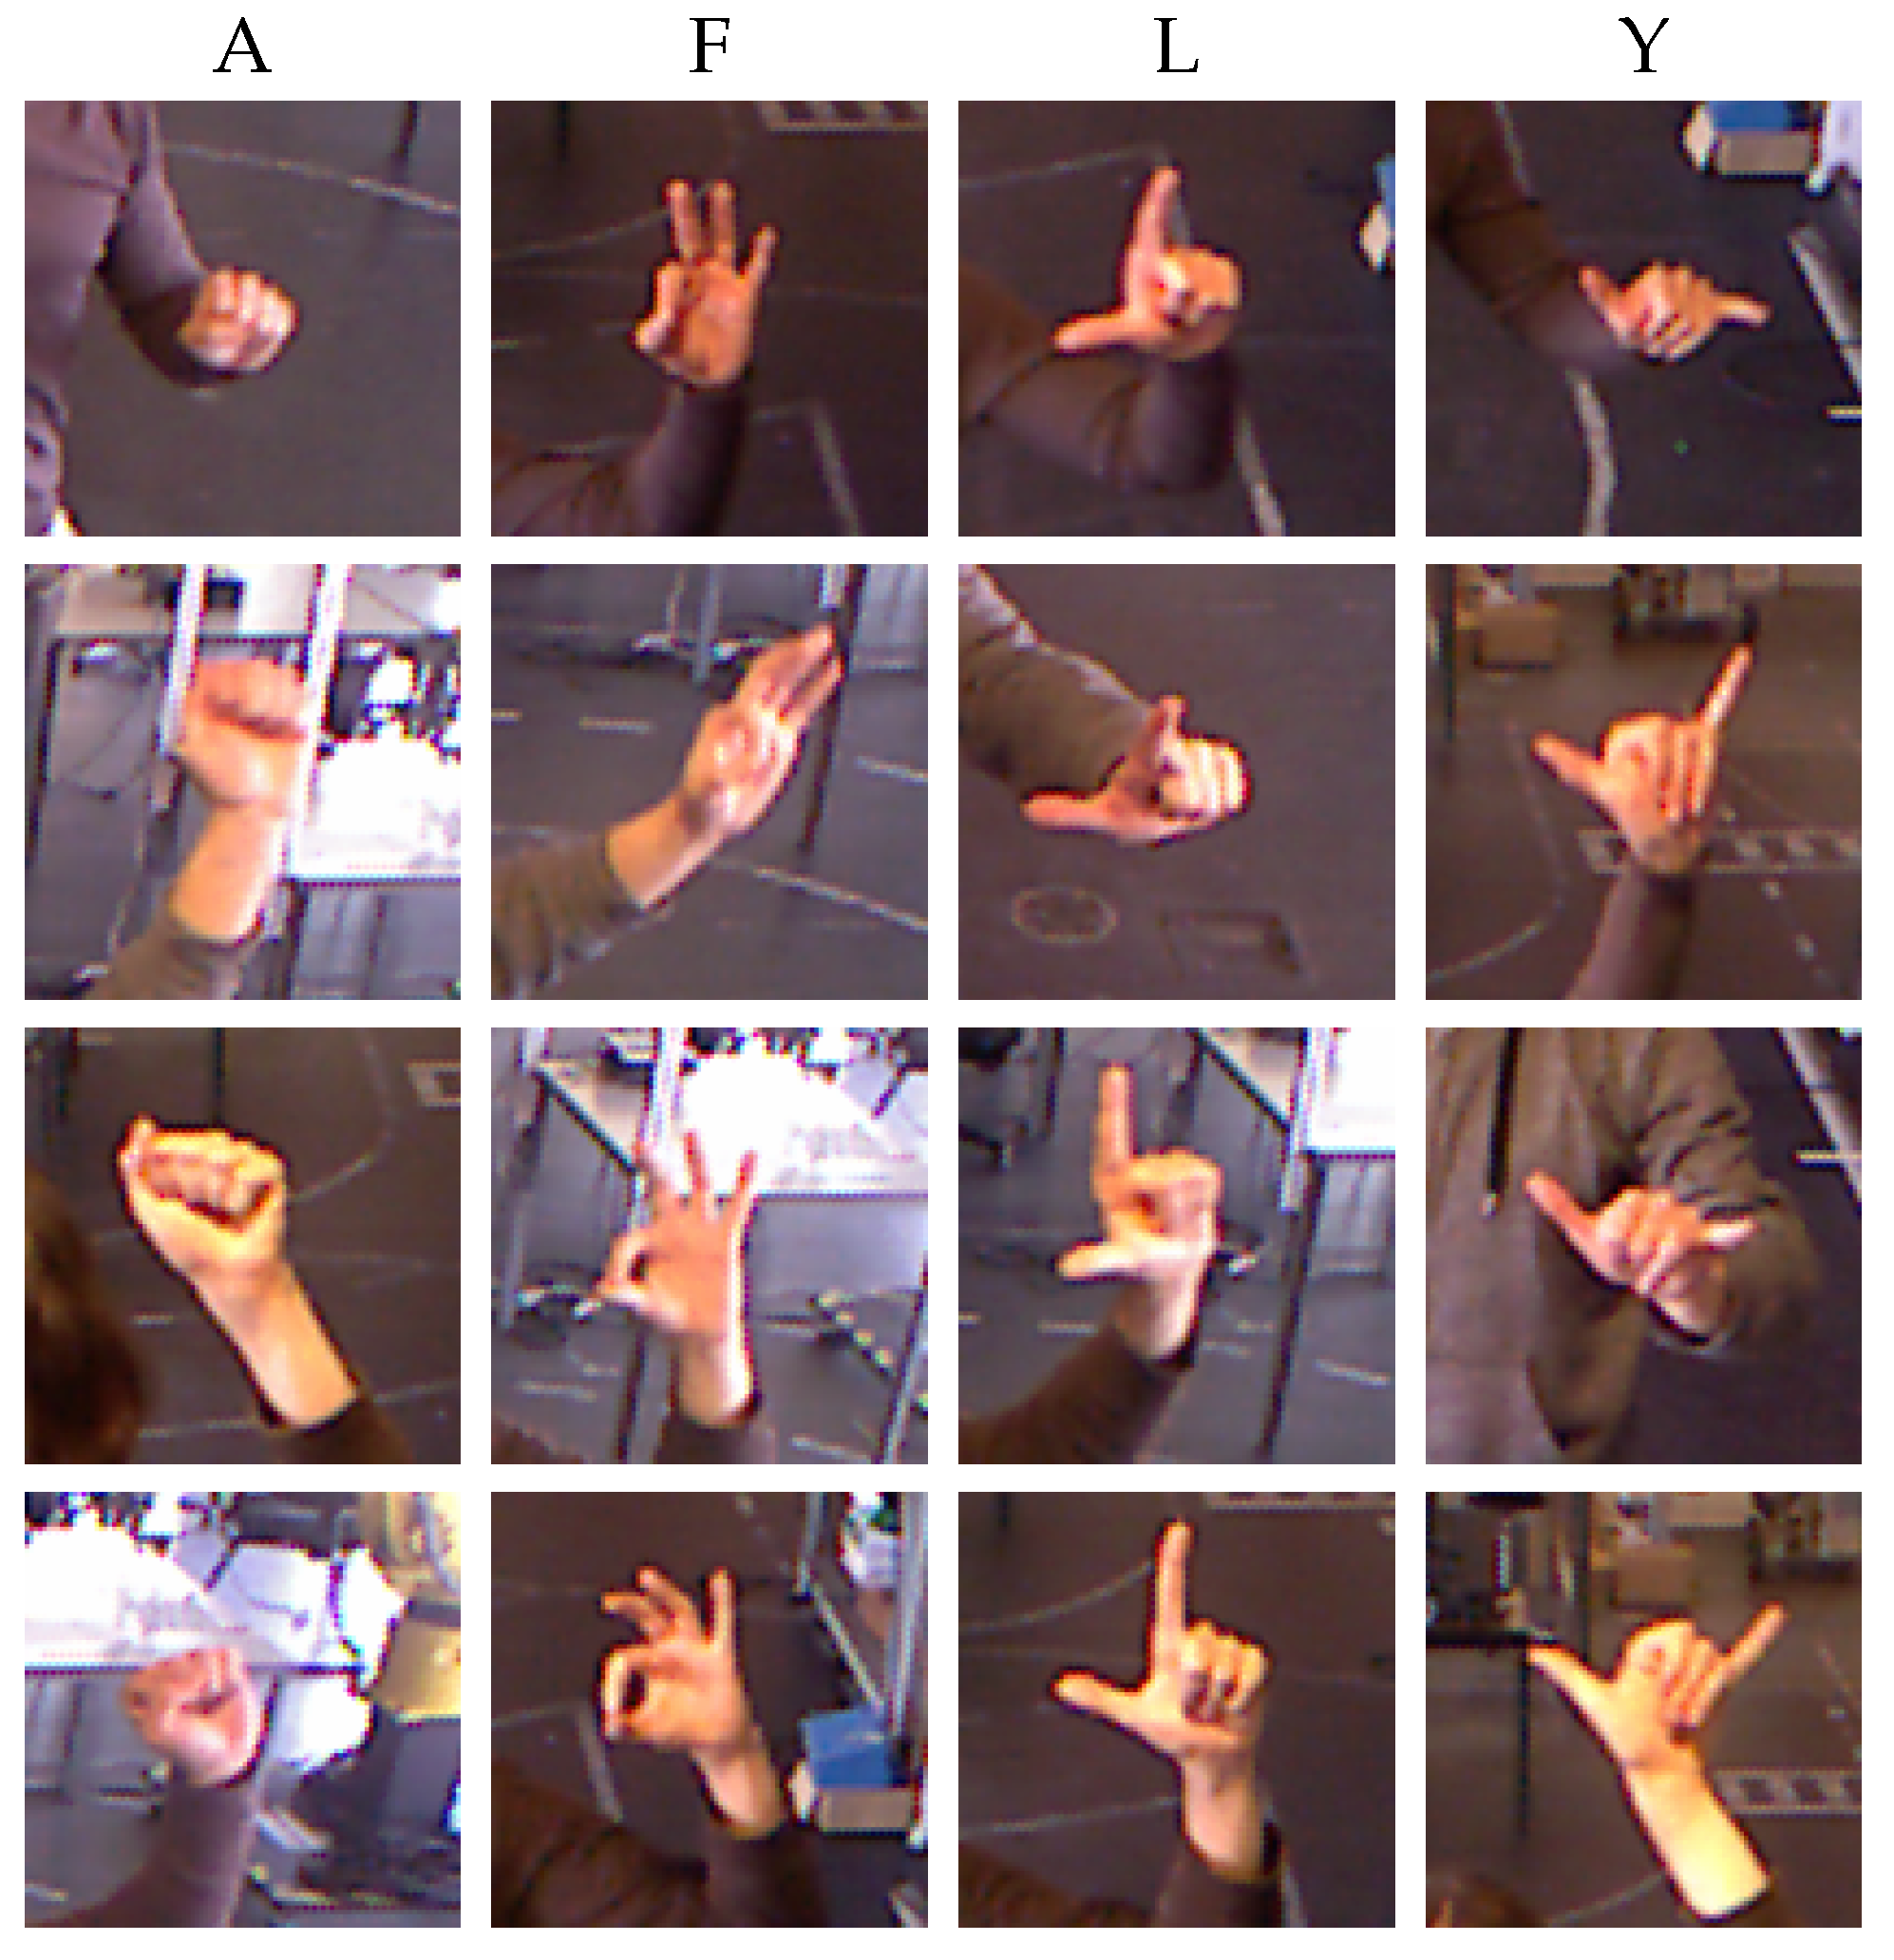 naruto hand signs for chidori level 3